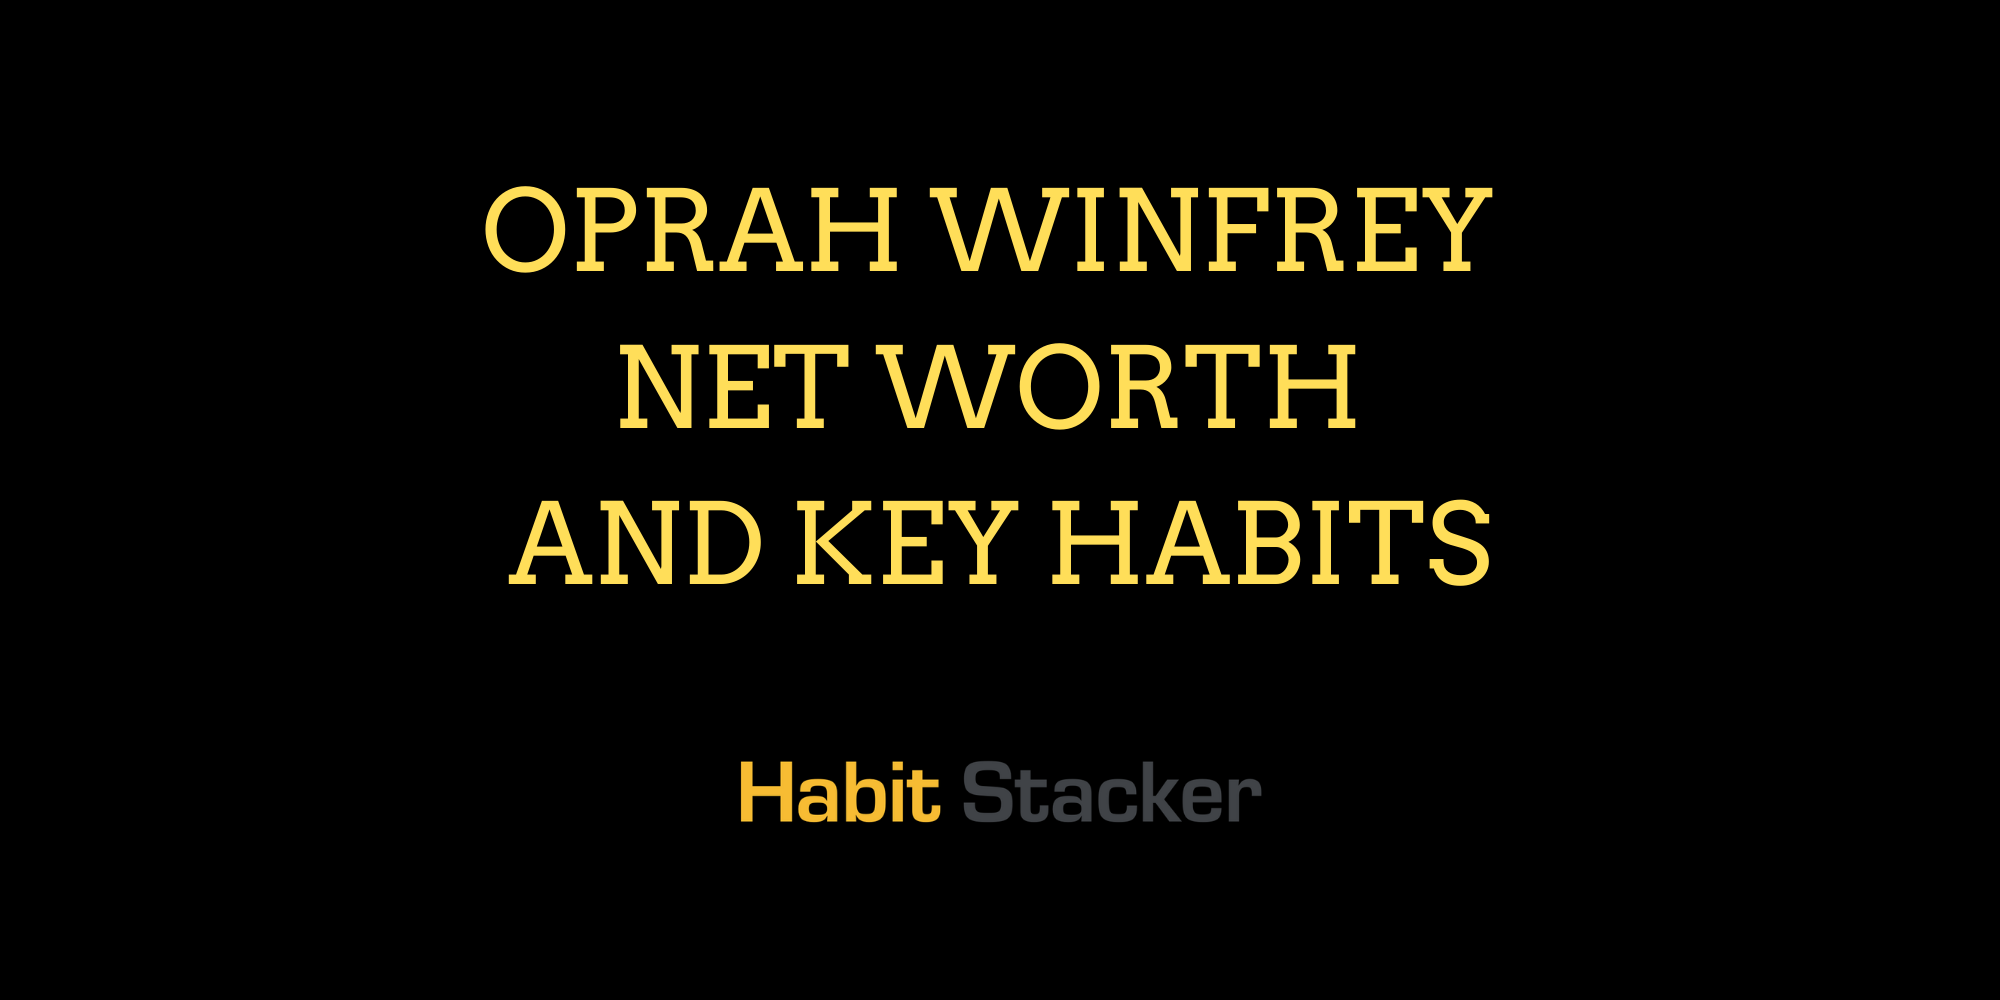 Oprah Winfrey Net Worth and Key Habits